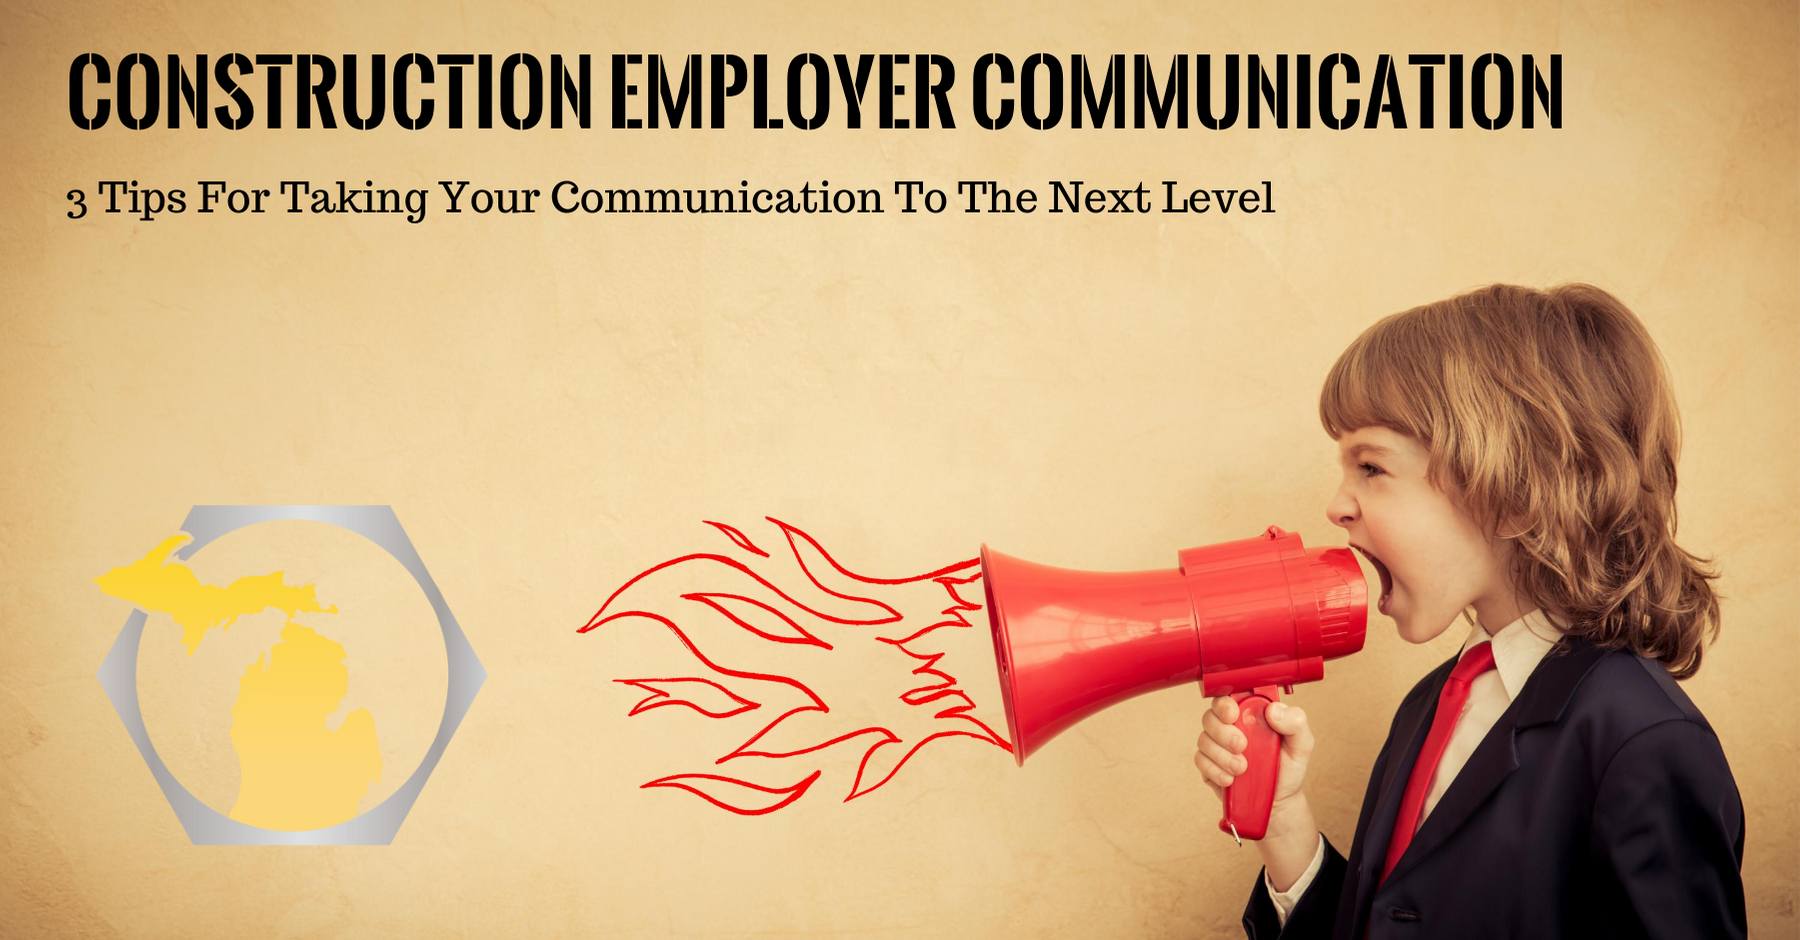 Communication Tips